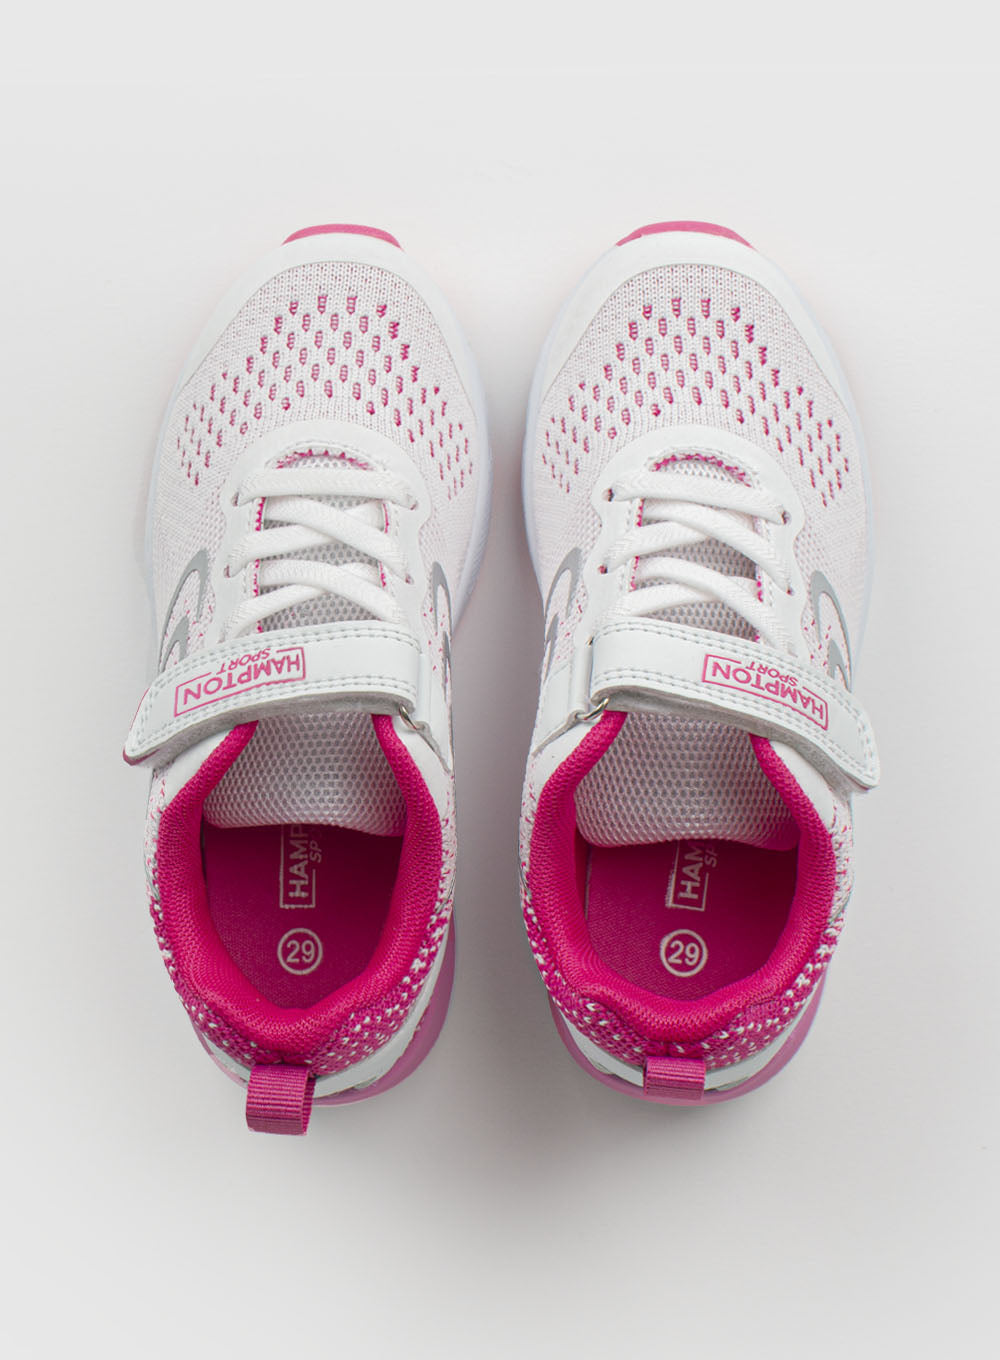 Hampton Sport Bolt Sneakers in White/Pink